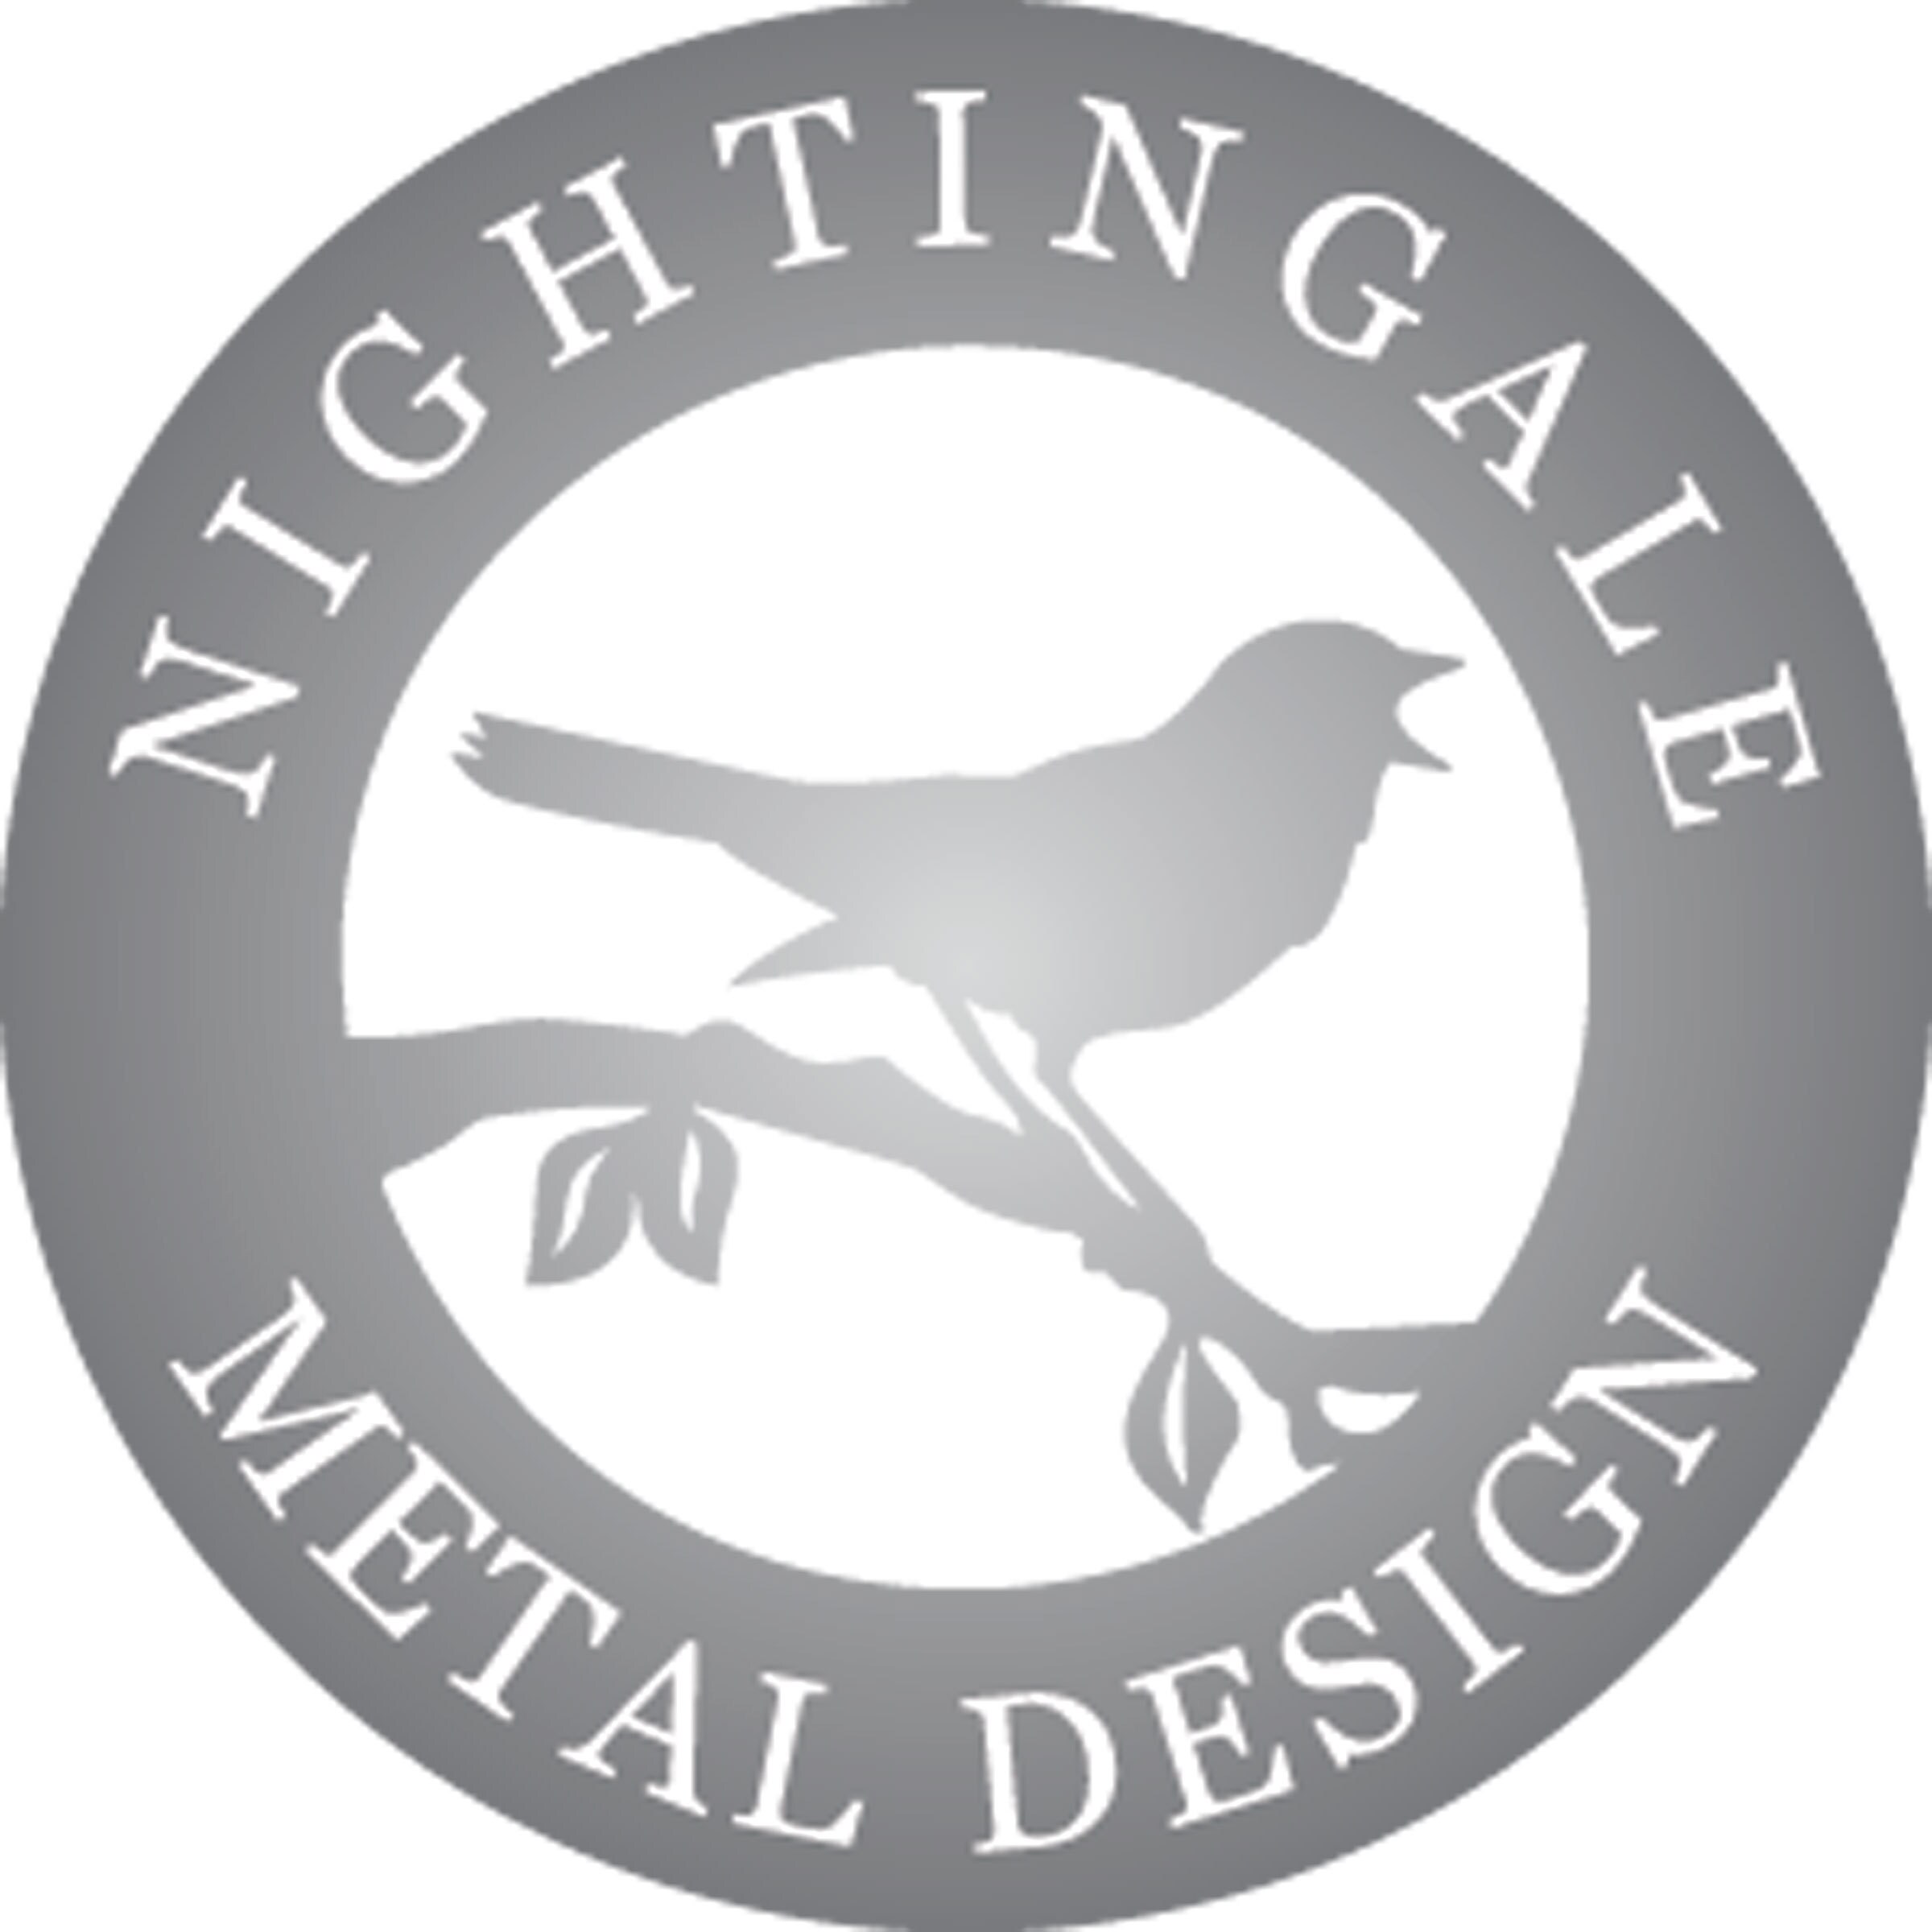 Nightingale Metal Design - Coffee & Wine Bar Round Metal Wall Sign